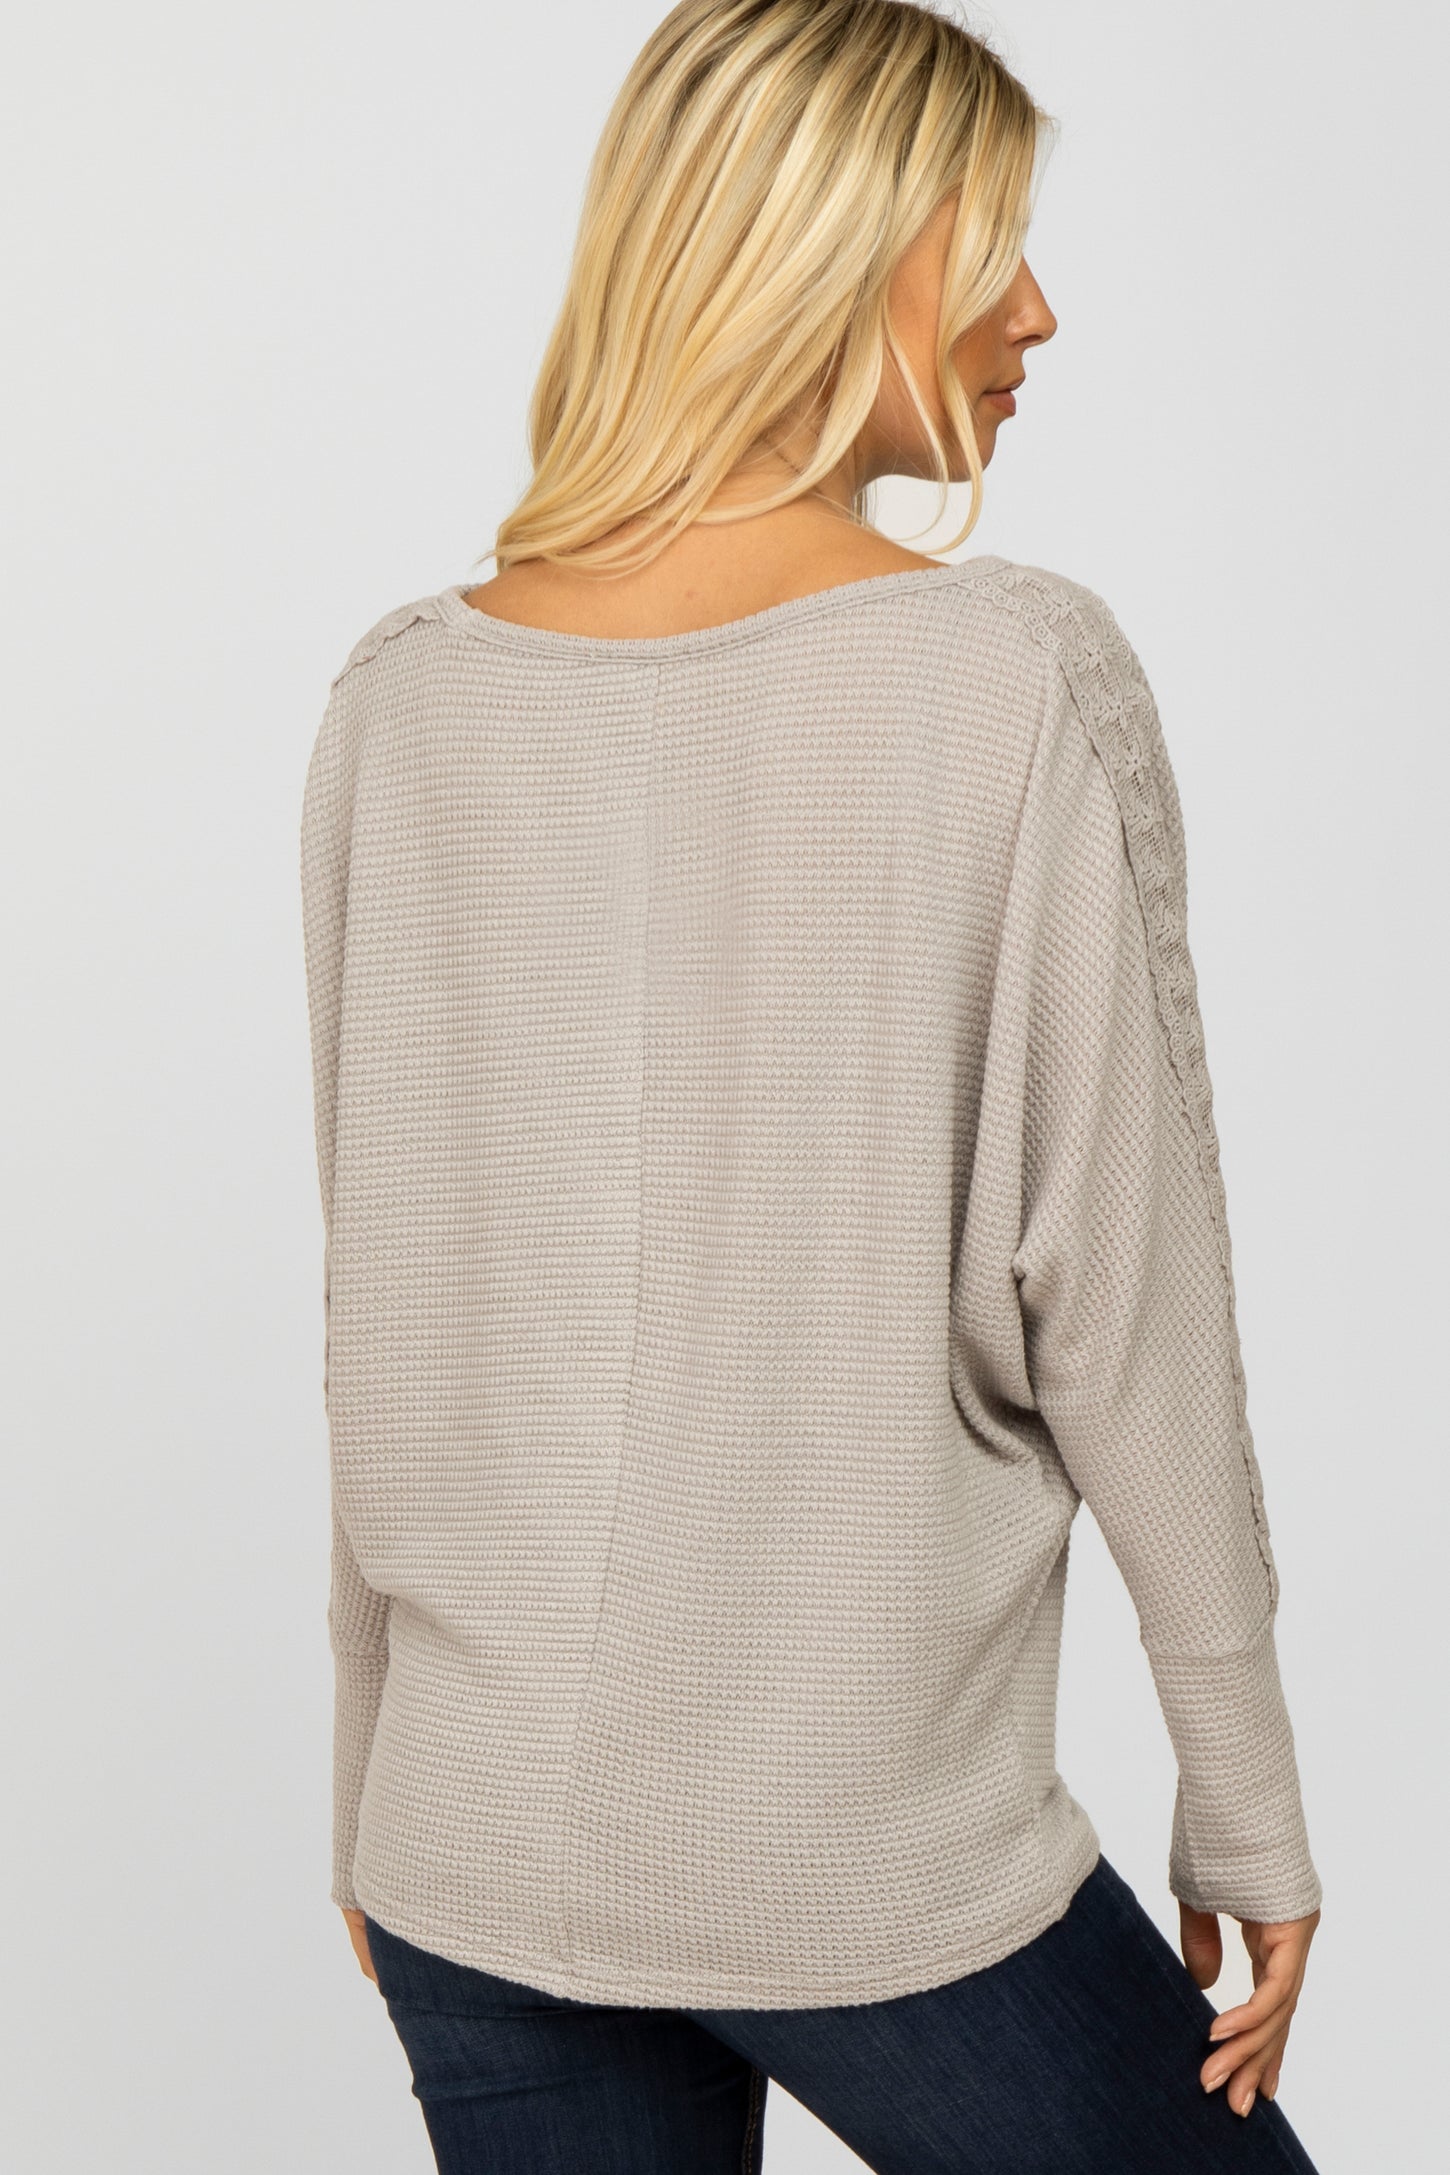 Heather Grey Crochet Lace Dolman Sleeve Top